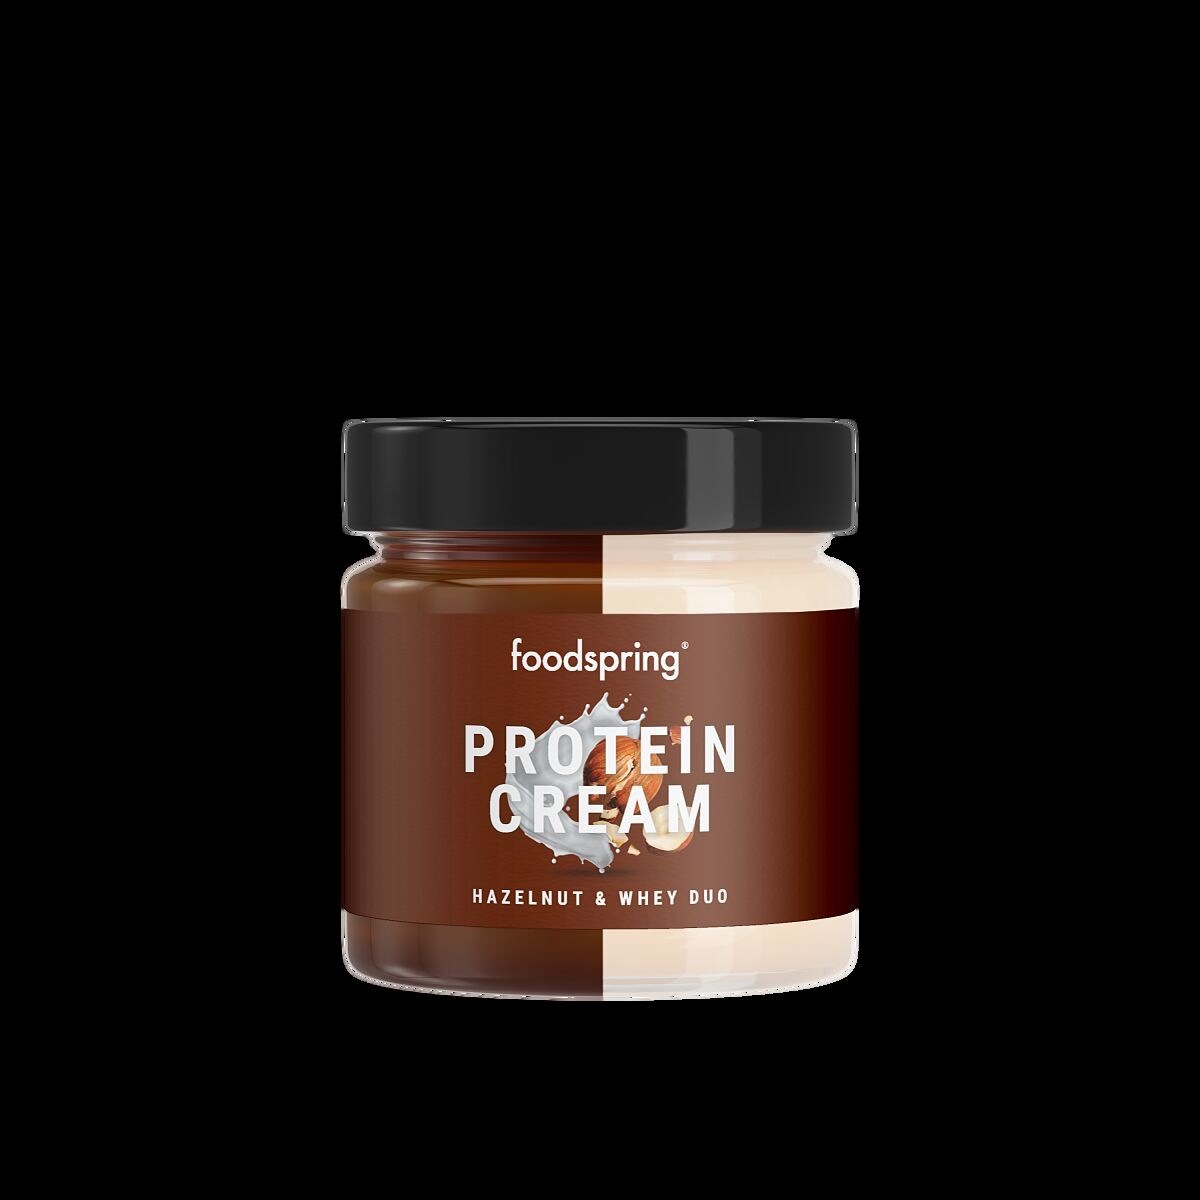 foodspring_Protein Cream_Hazelnut & Whey Duo_EUR 5,99